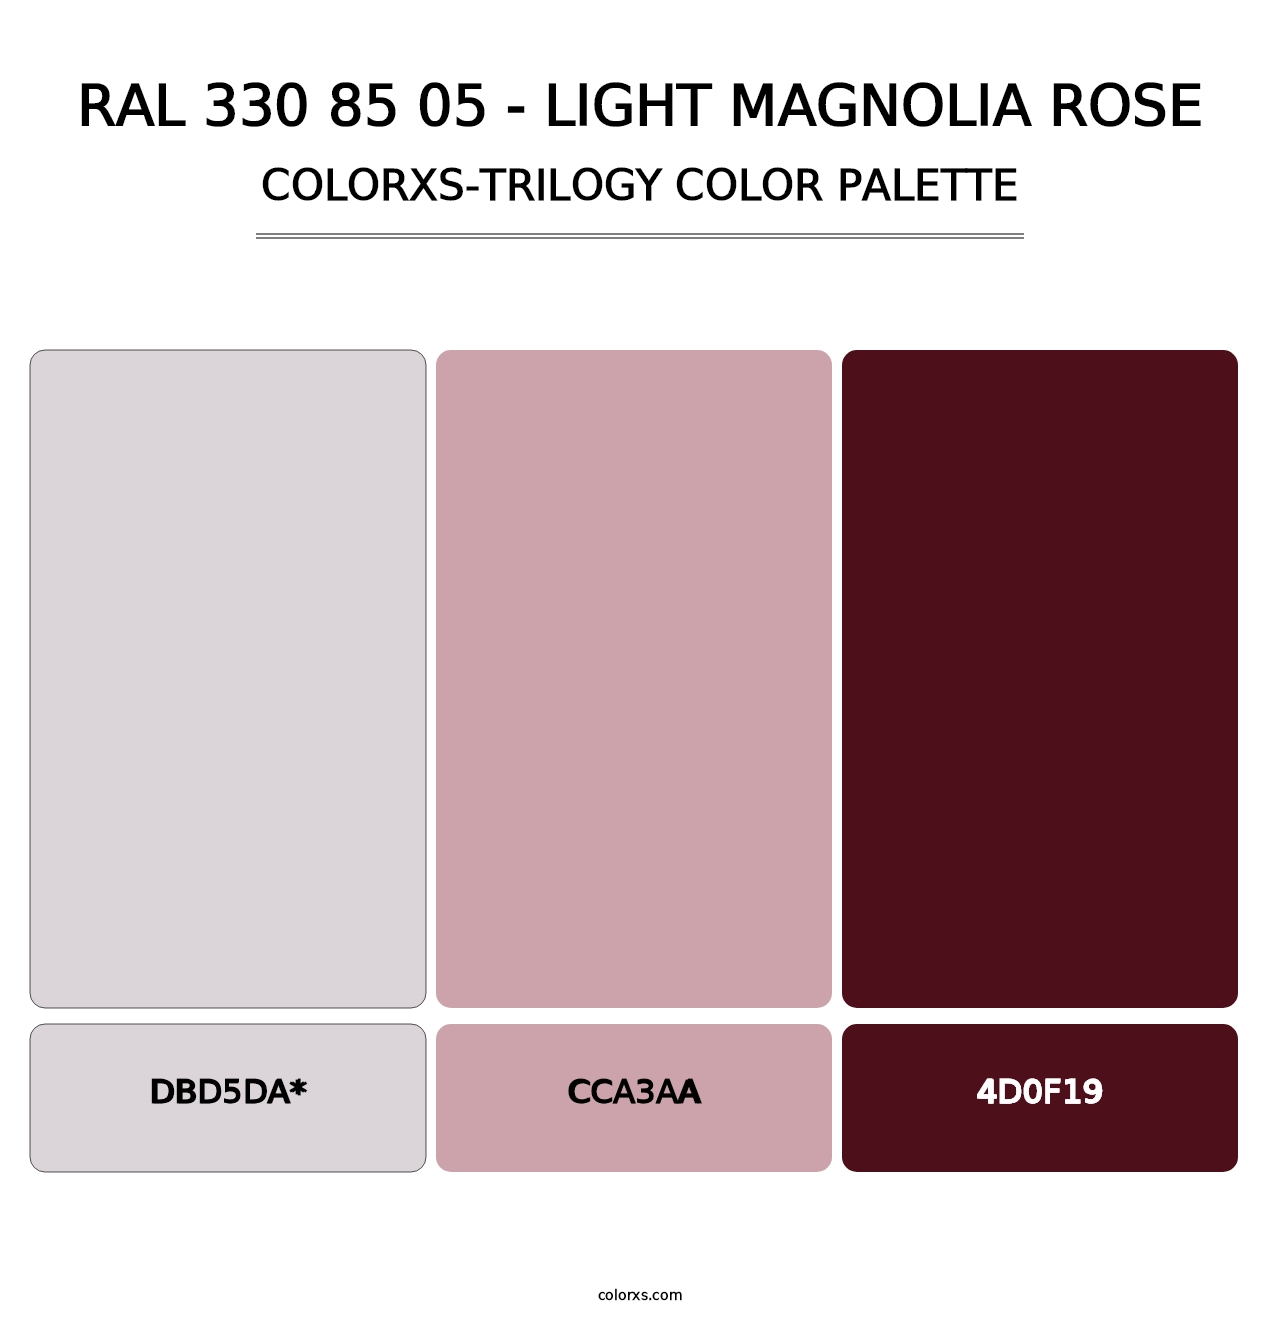 RAL 330 85 05 - Light Magnolia Rose - Colorxs Trilogy Palette